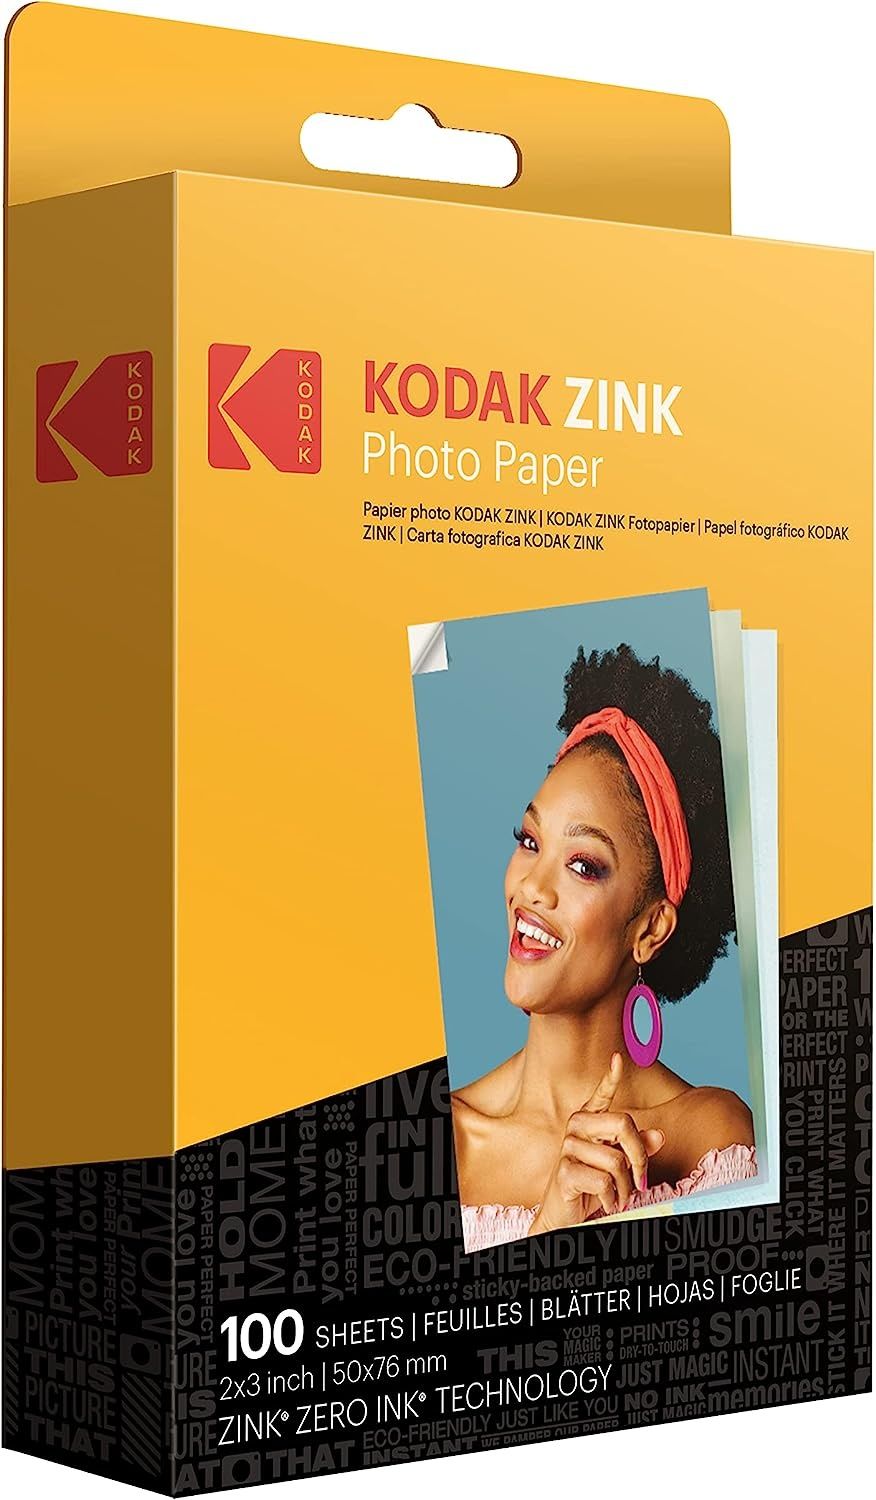 Kodak zink papel fotográfico instantaneo polaroid.
Papel fot